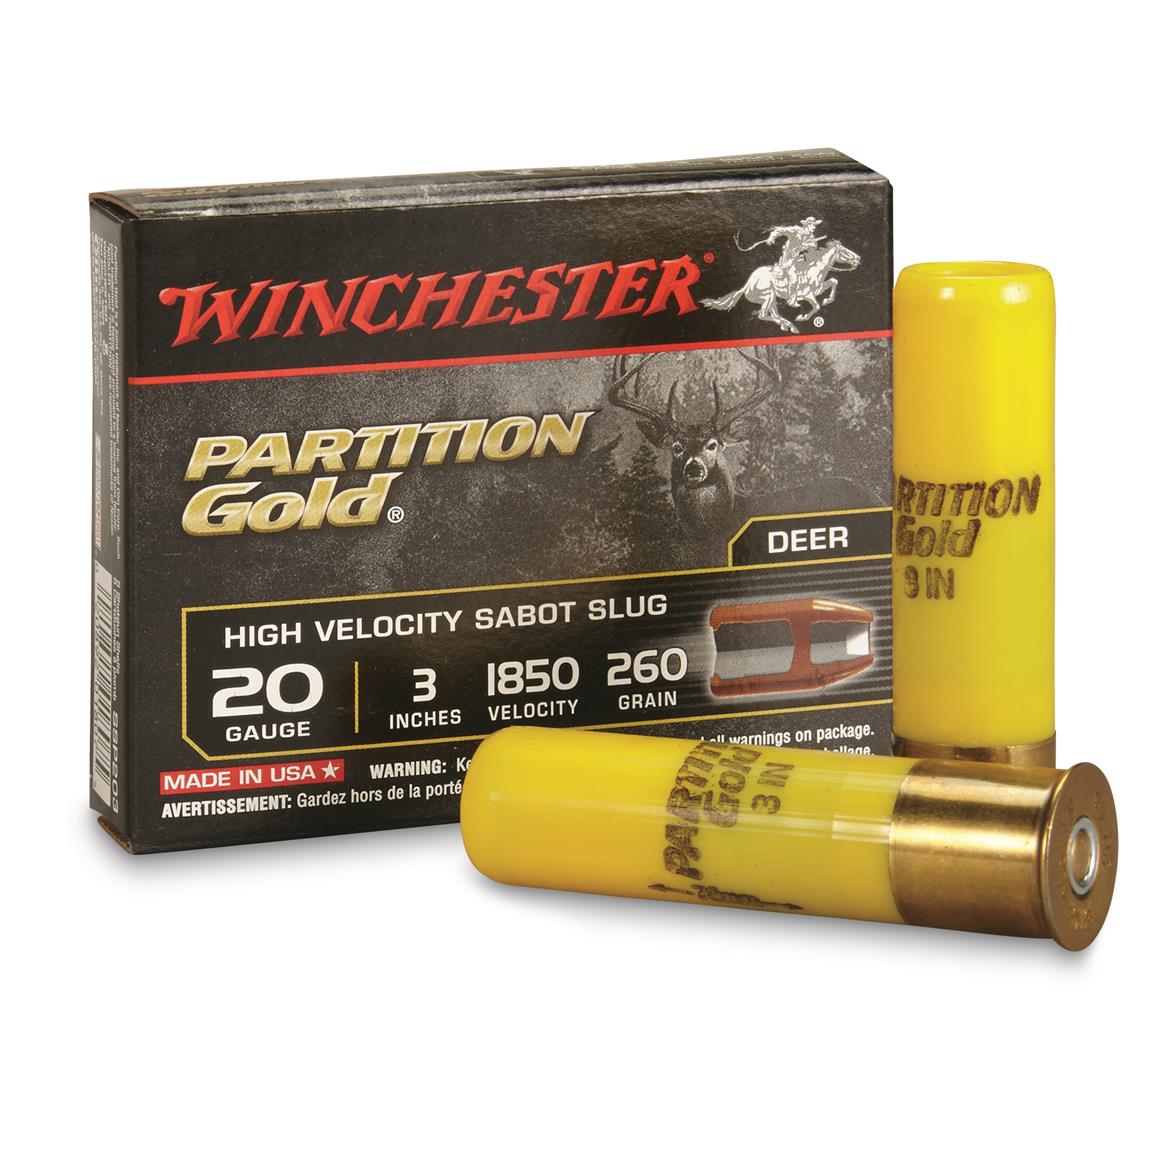 Winchester Partition Gold, 20 Gauge, 3", 260 Grain, Sabot Slug, 5 Rounds